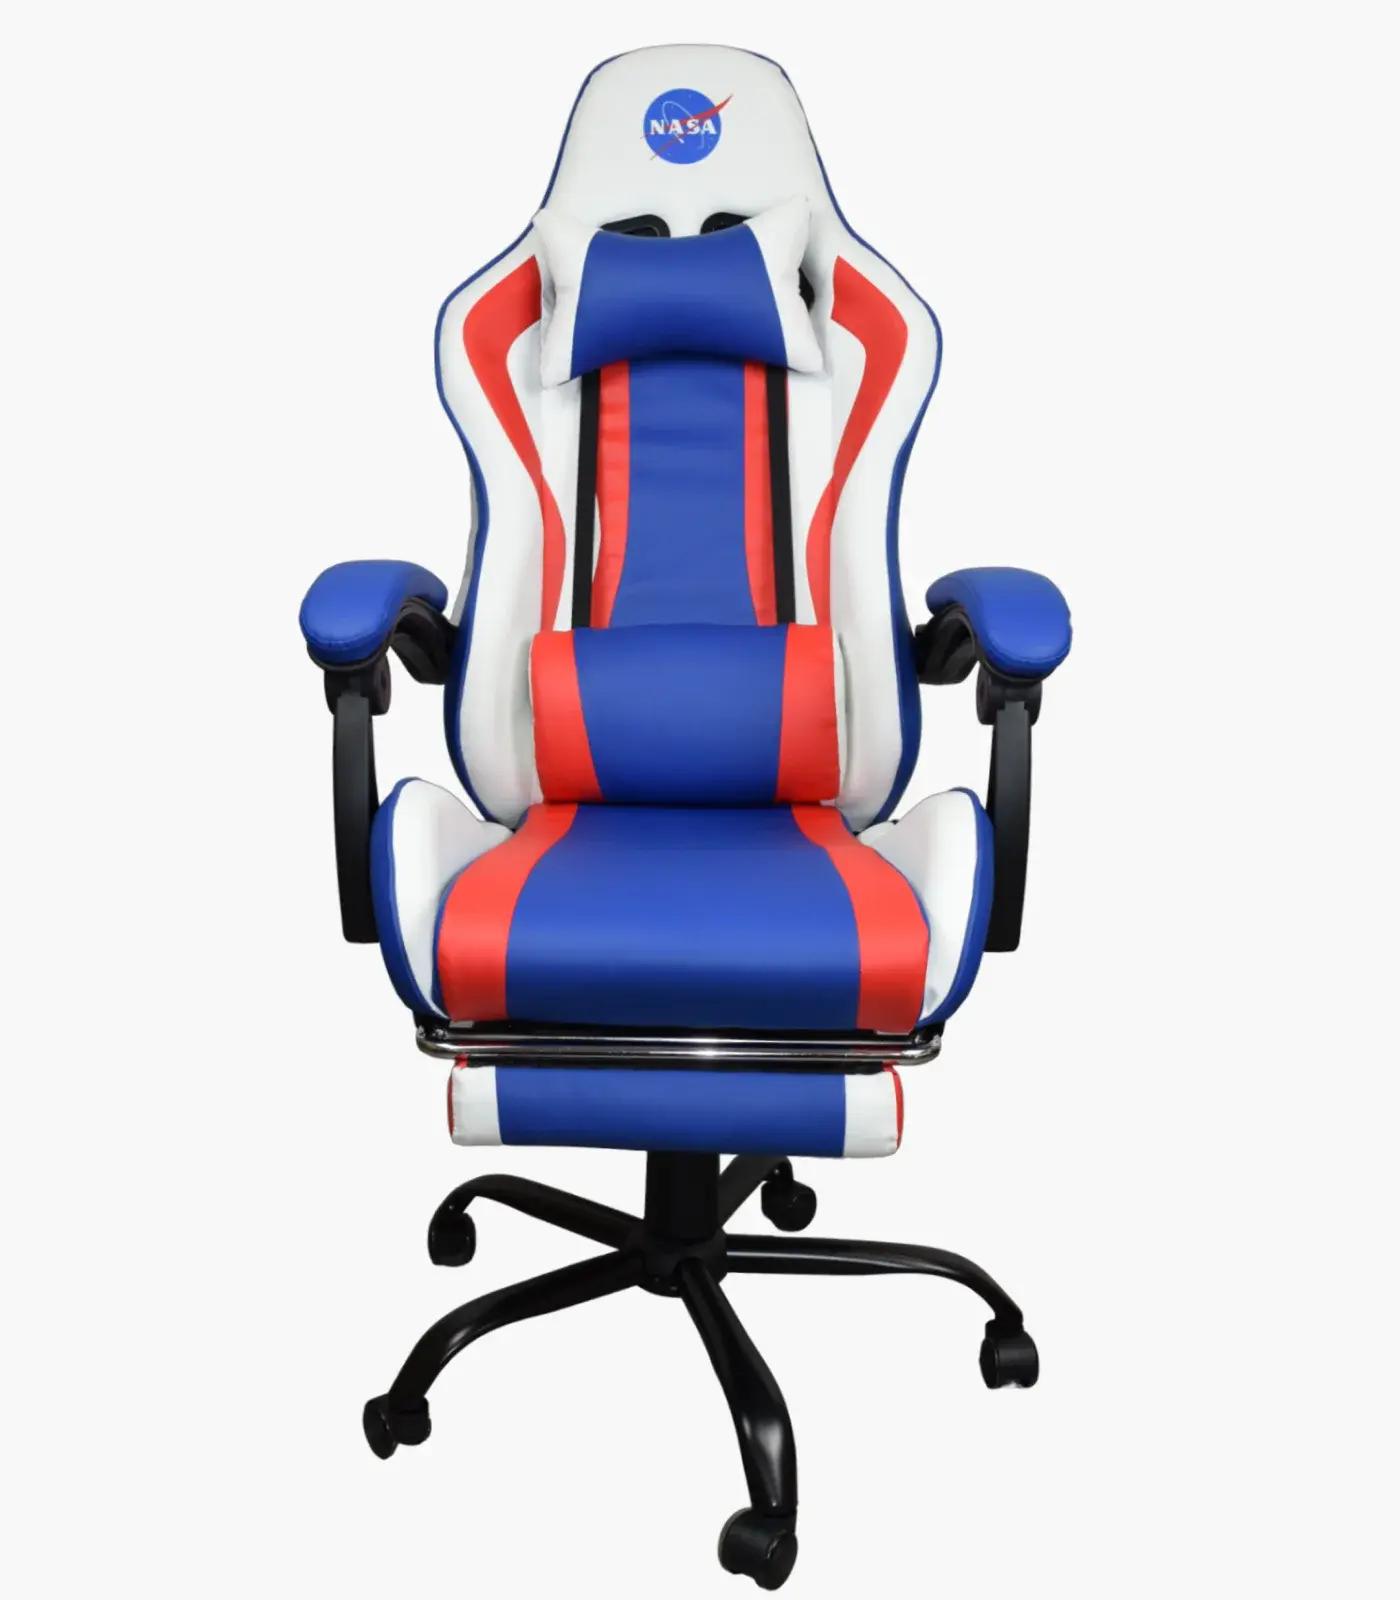 NASA Gaming stolica DISCOVERY plavo-crvena